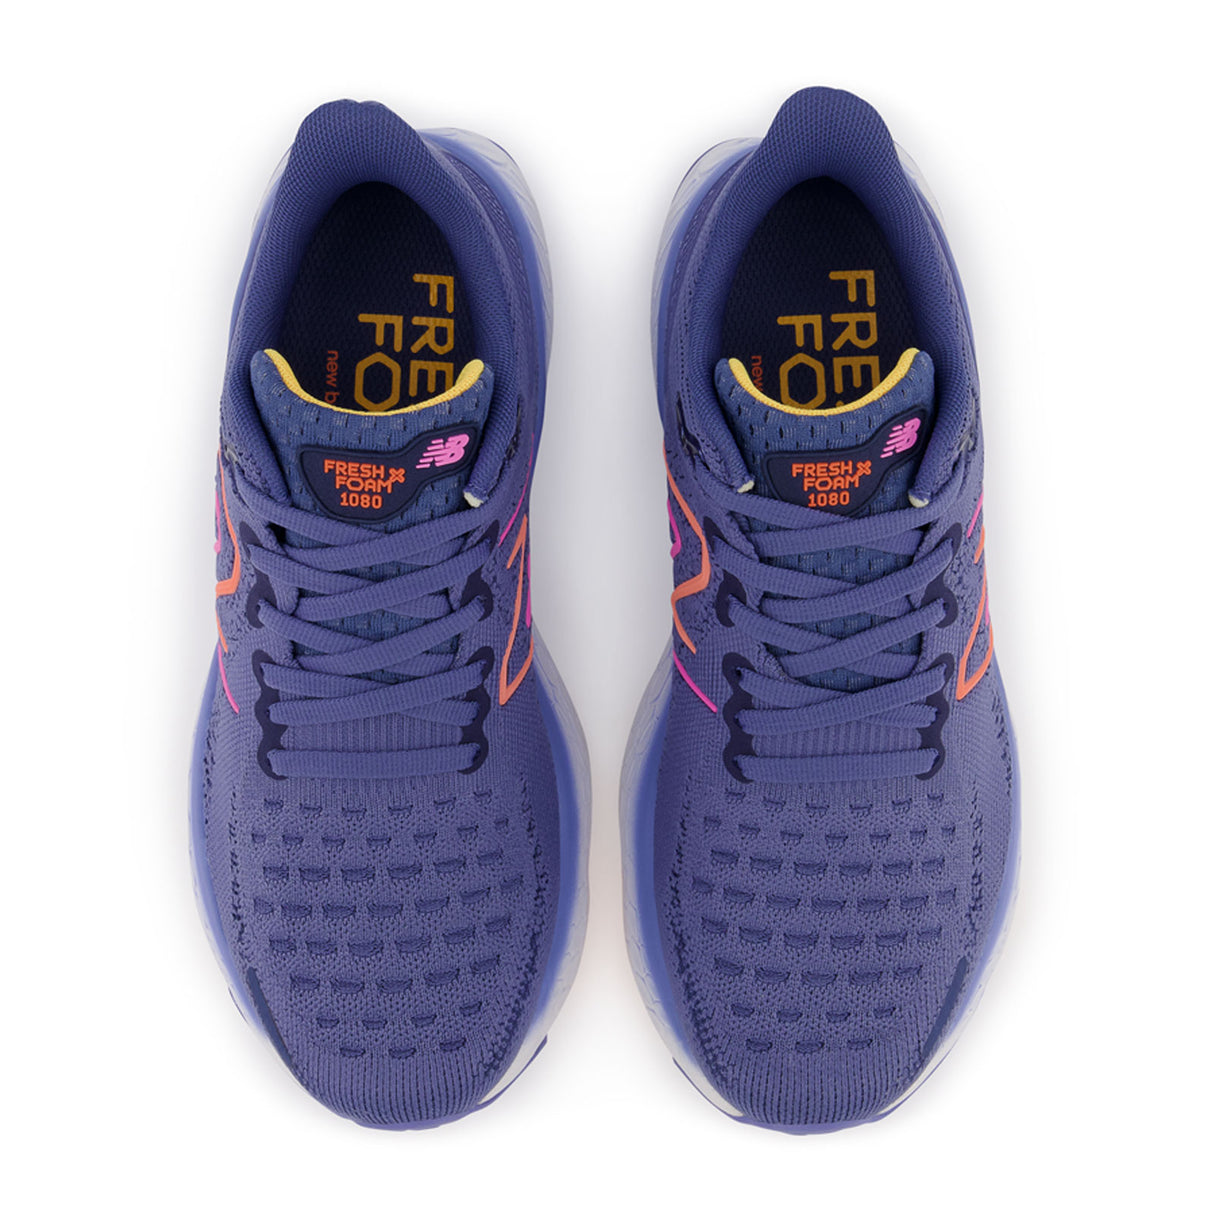 New Balance Fresh Foam X 1080 v12 Running Shoe (Women) - Vibrant Orange/Vibrant Pink/Moon Shadow Athletic - Running - The Heel Shoe Fitters